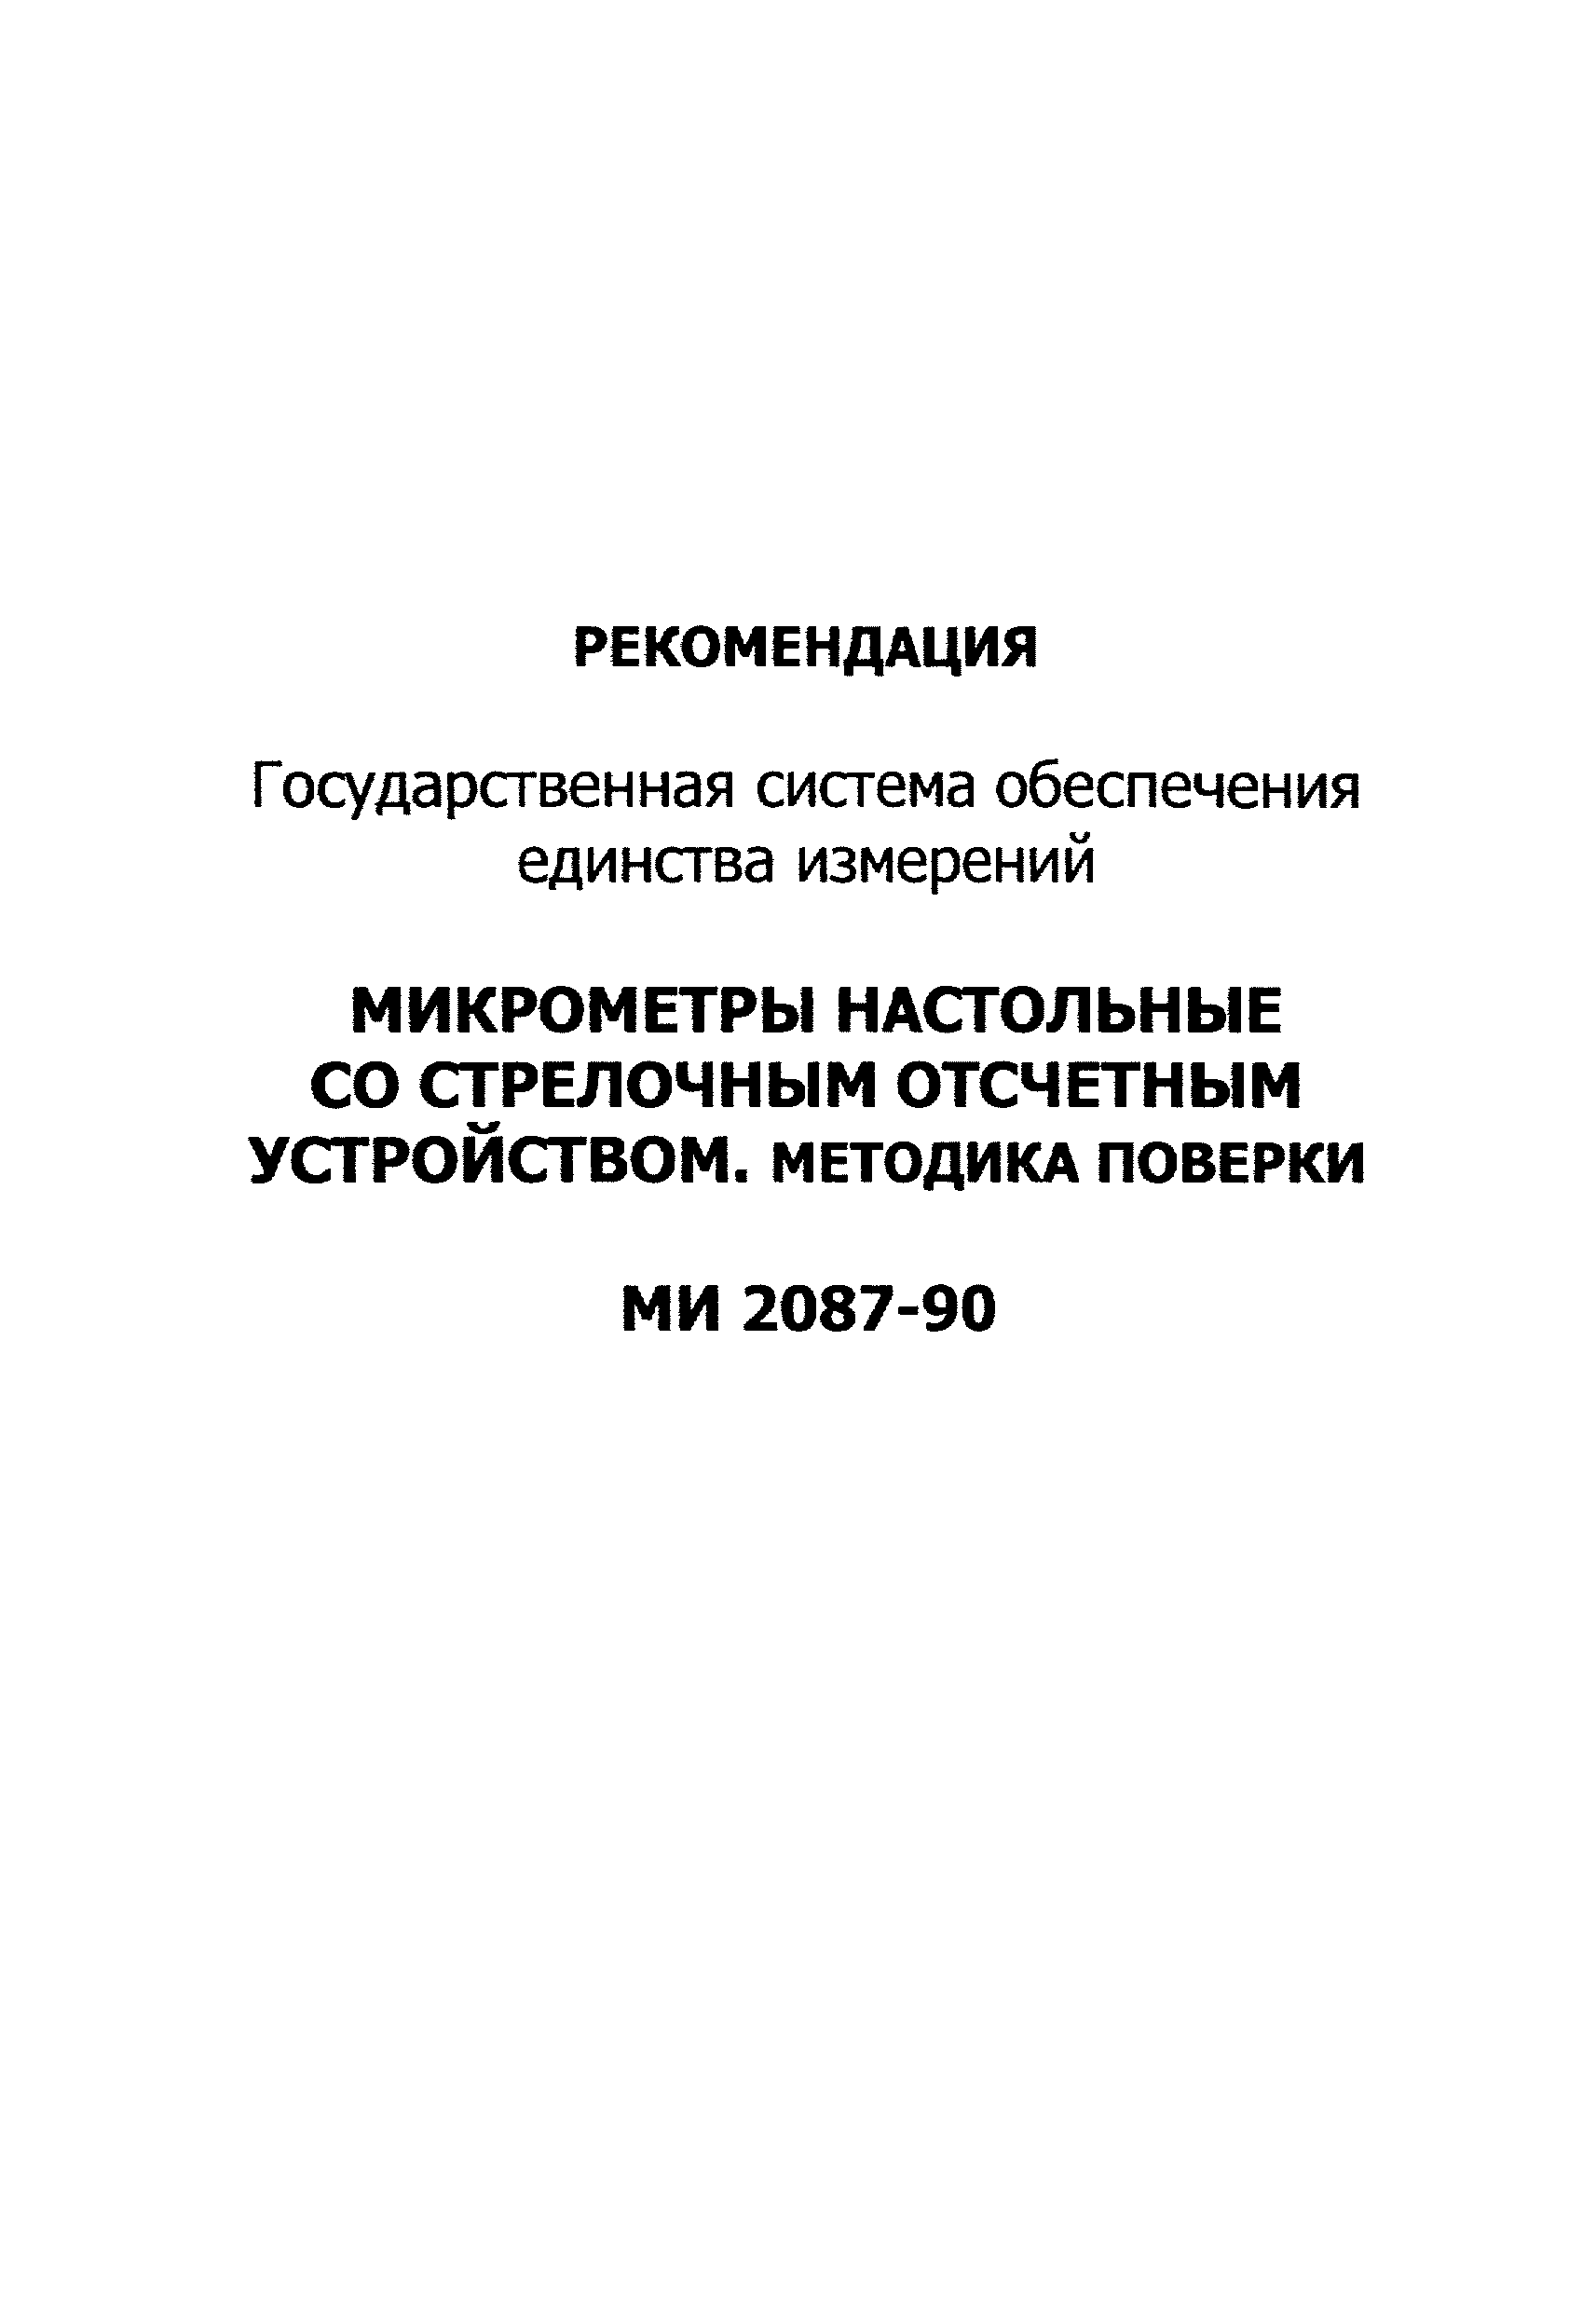 МИ 2087-90